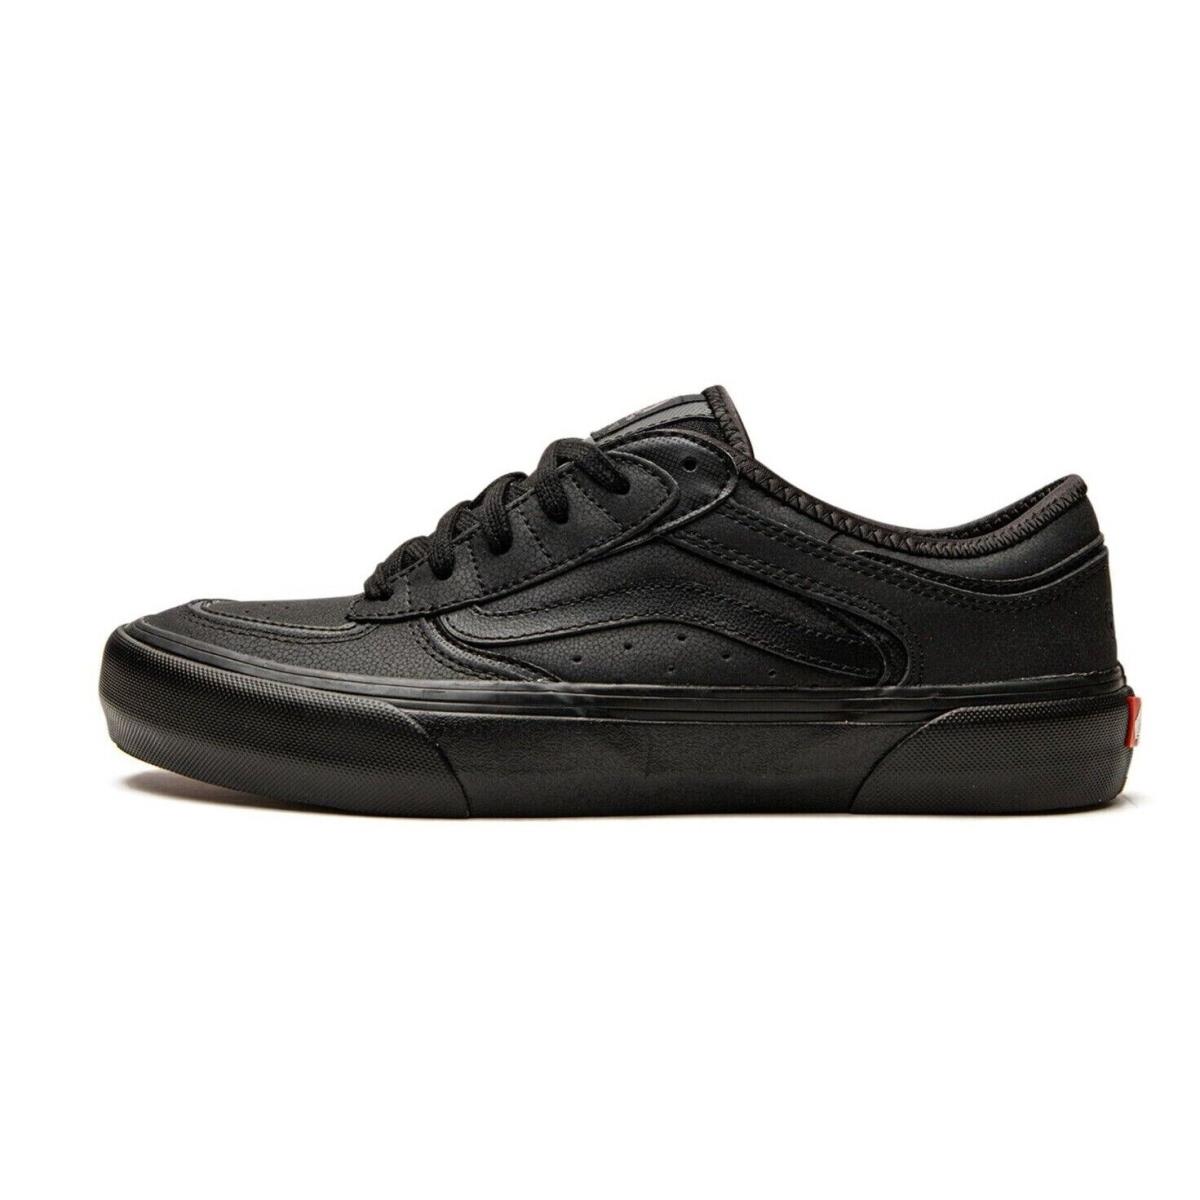 Vans Rowley Pro Skate Shoes Black/Black